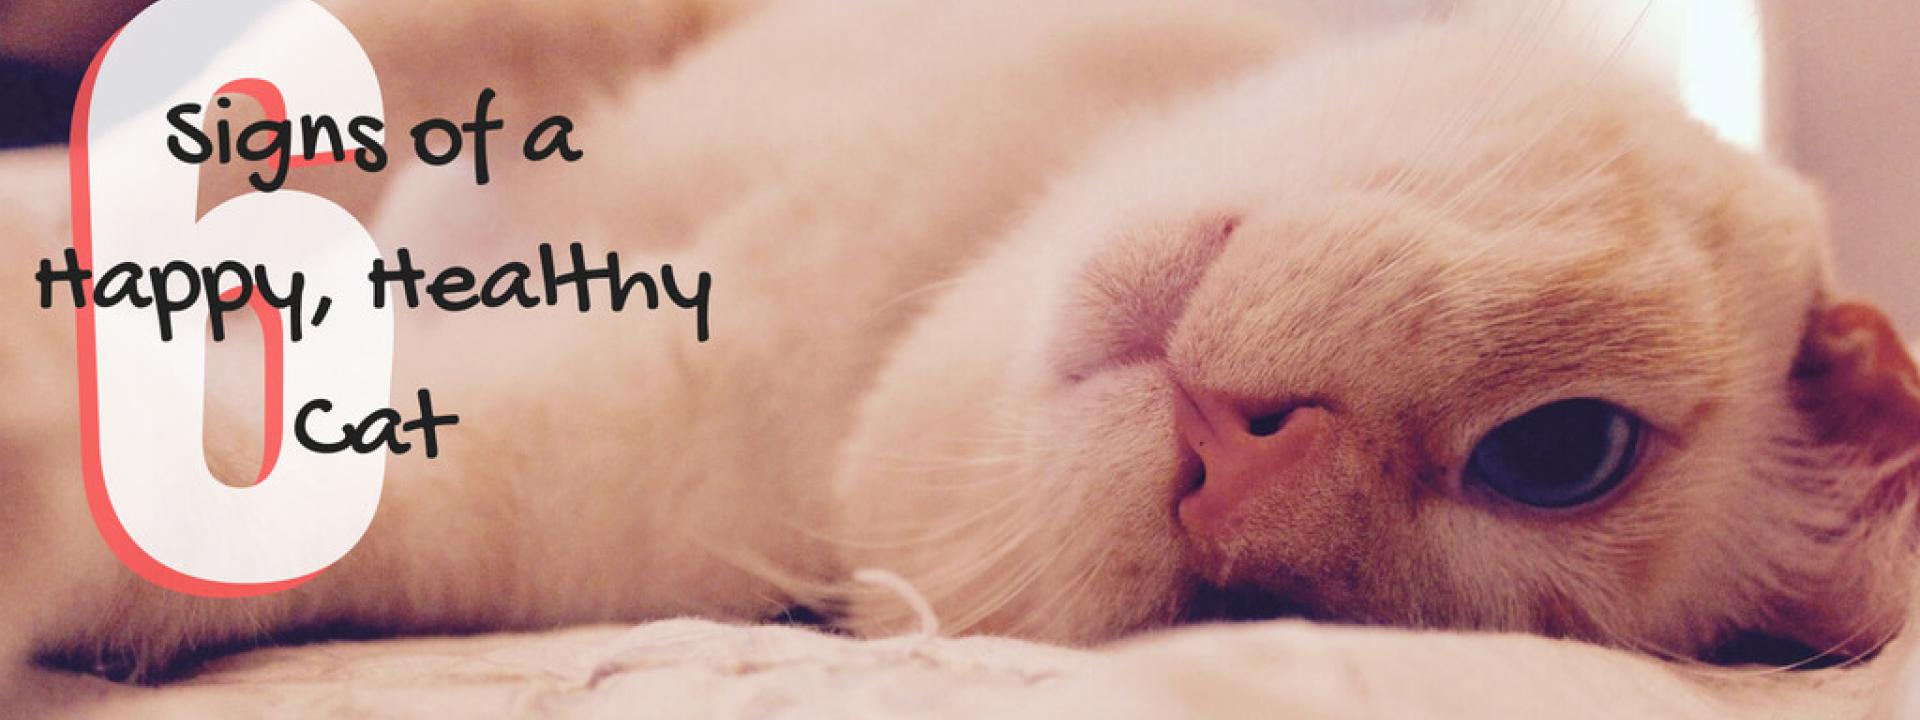 happy-healthy-cat-blog-header.jpg